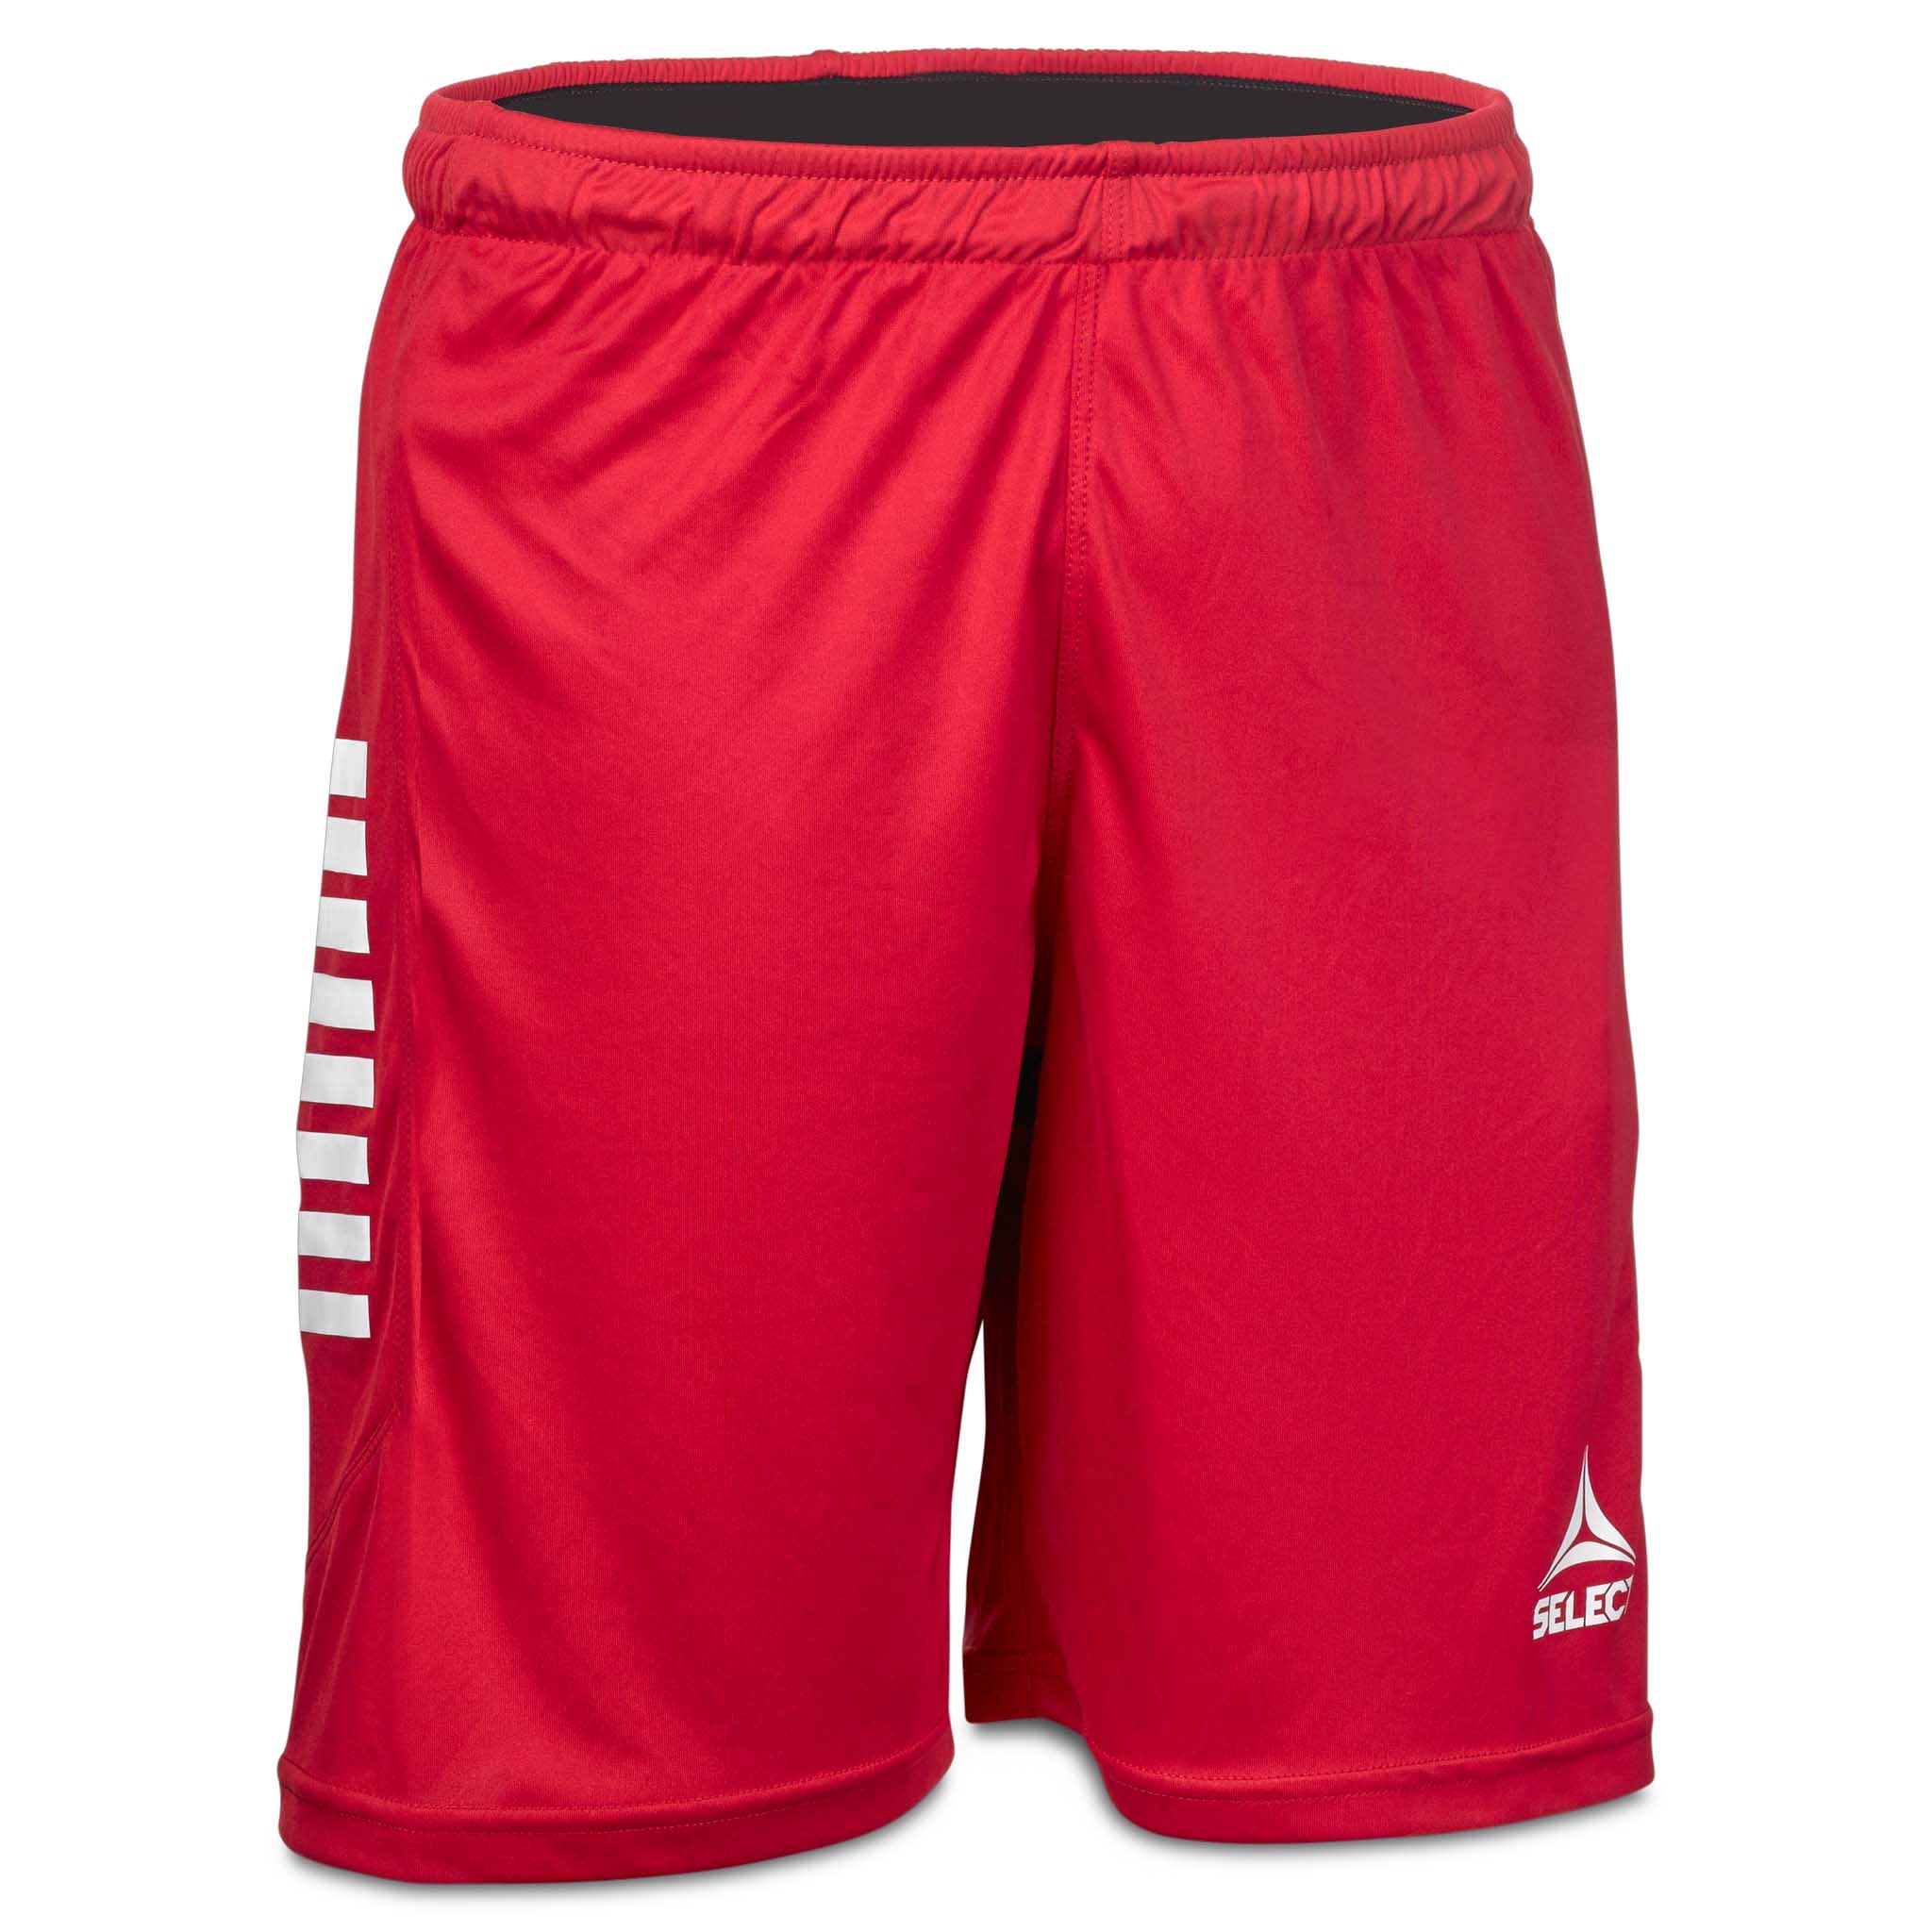 Monaco shorts - Barn #färg_röd/vit